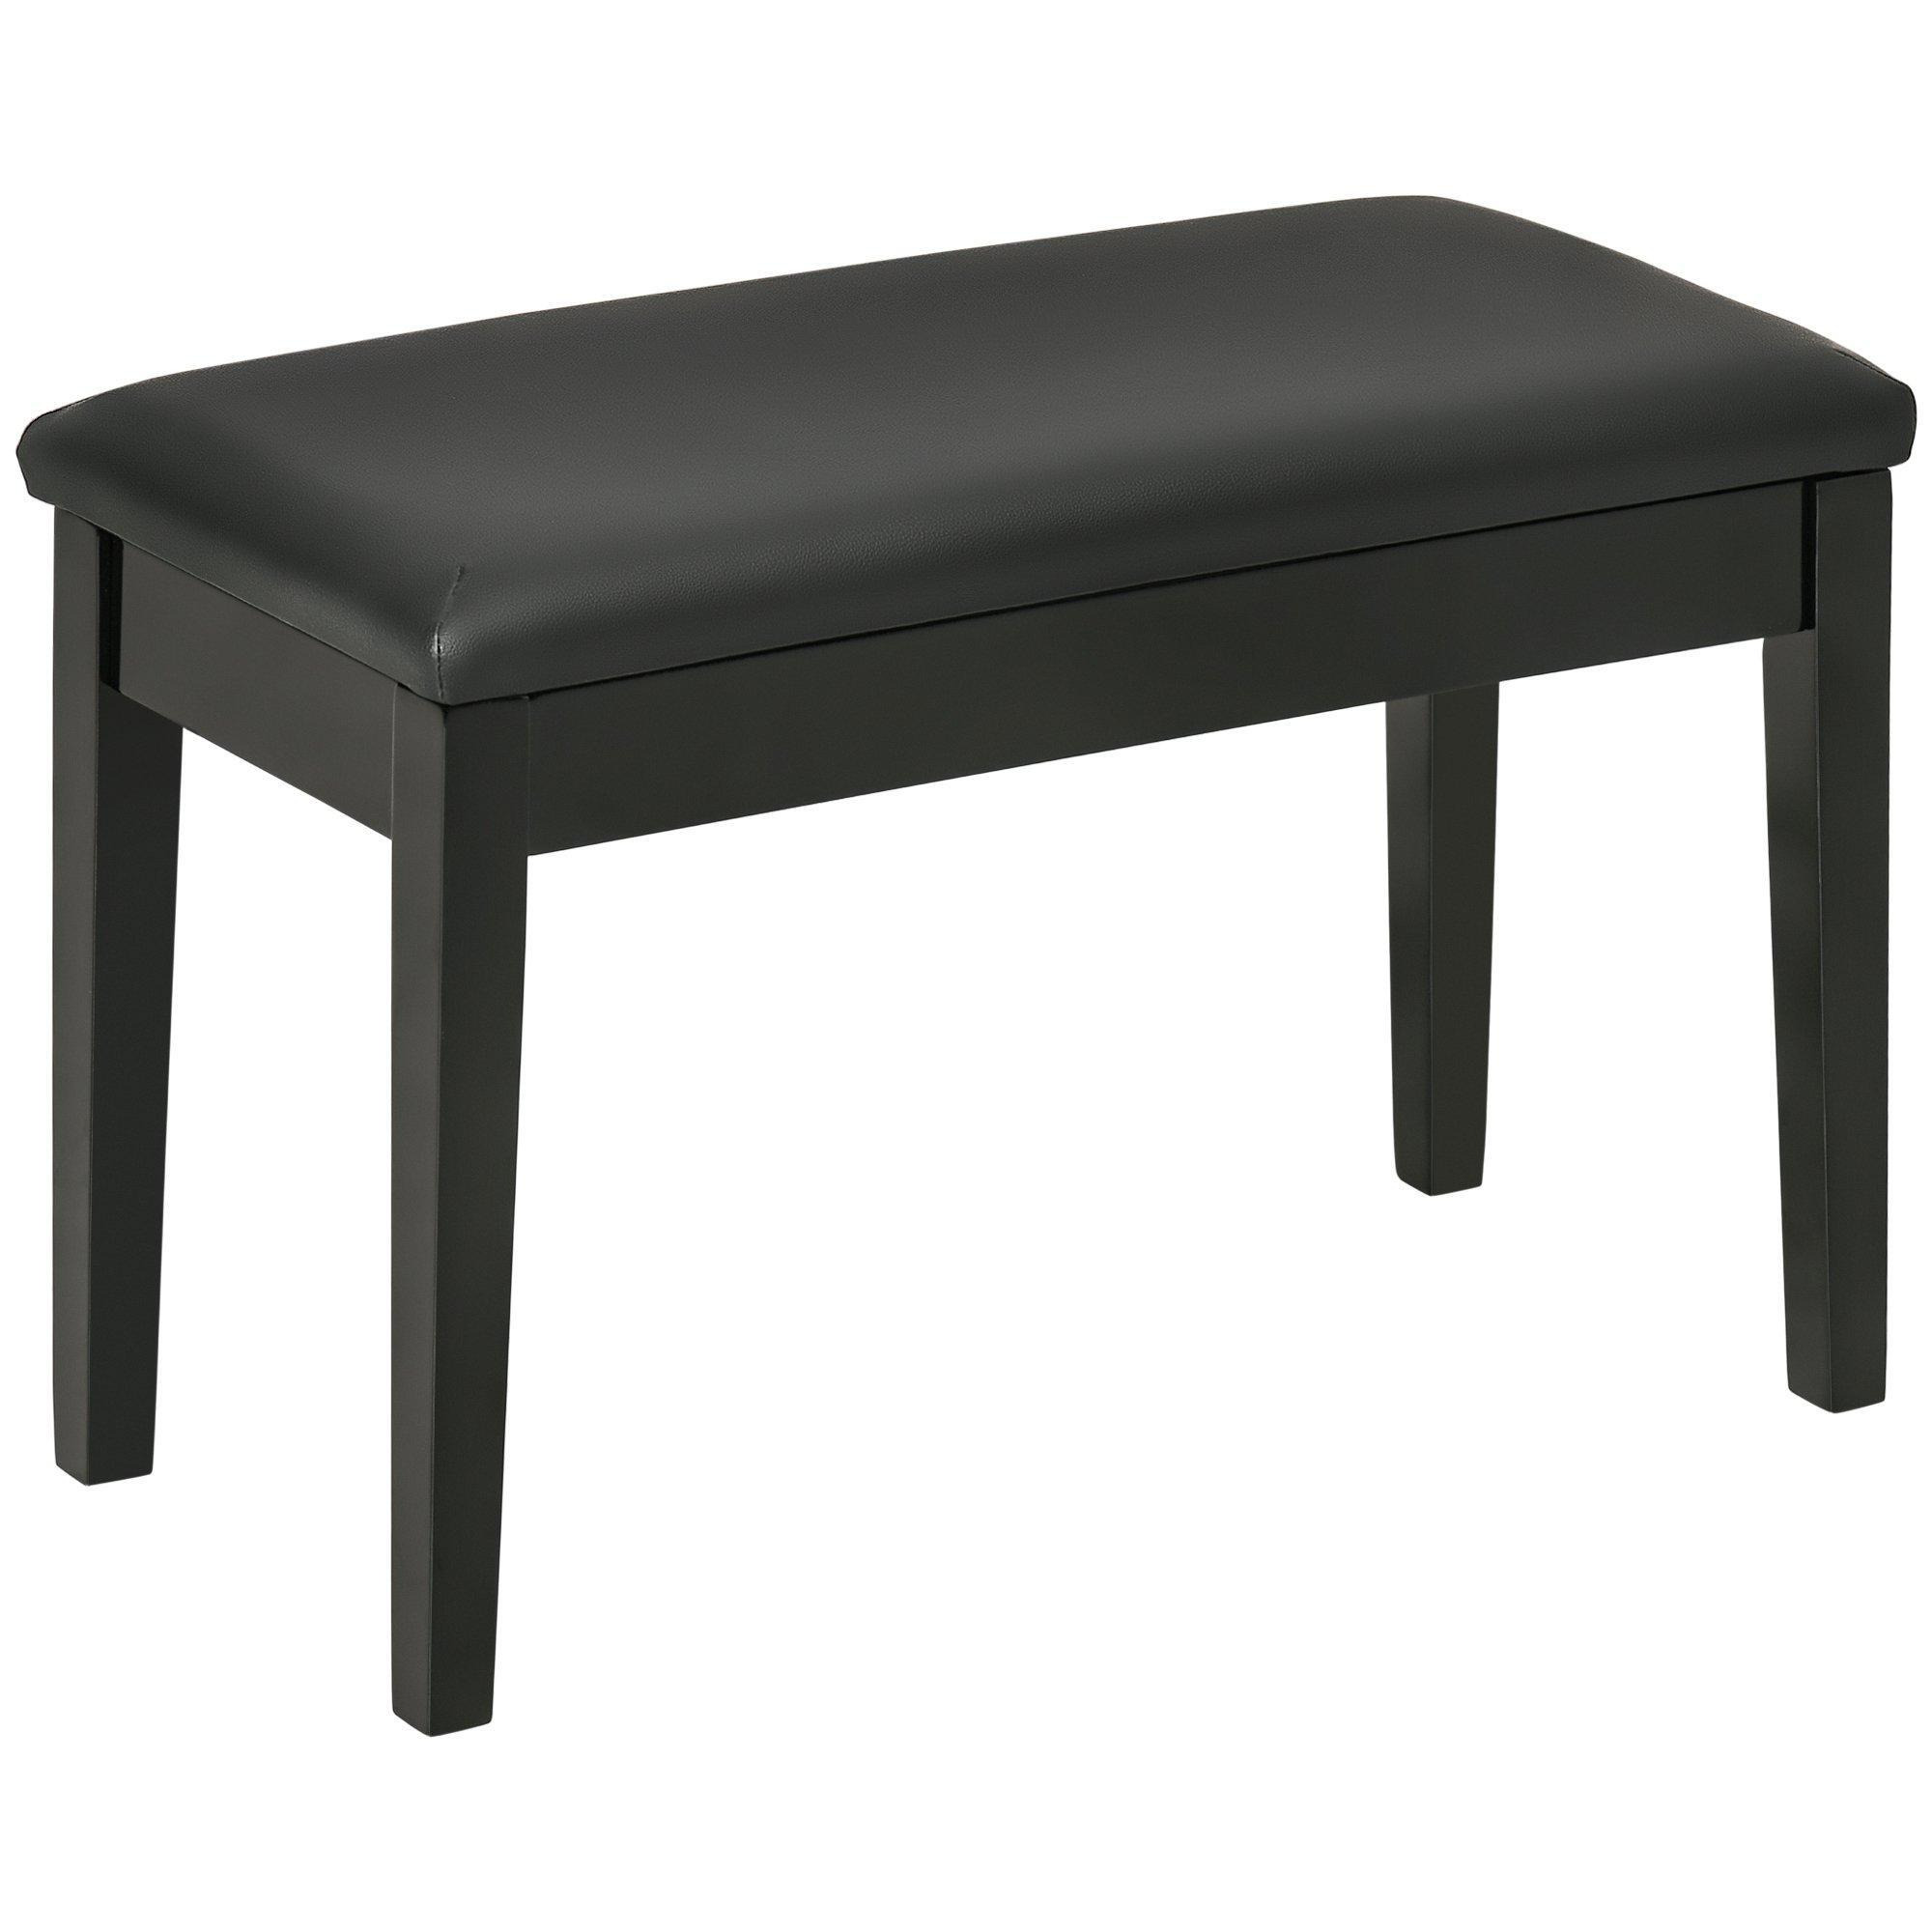 Classic Piano Bench Stool, PU Leather Keyboard Seat Rubber Wood Legs Black - image 1